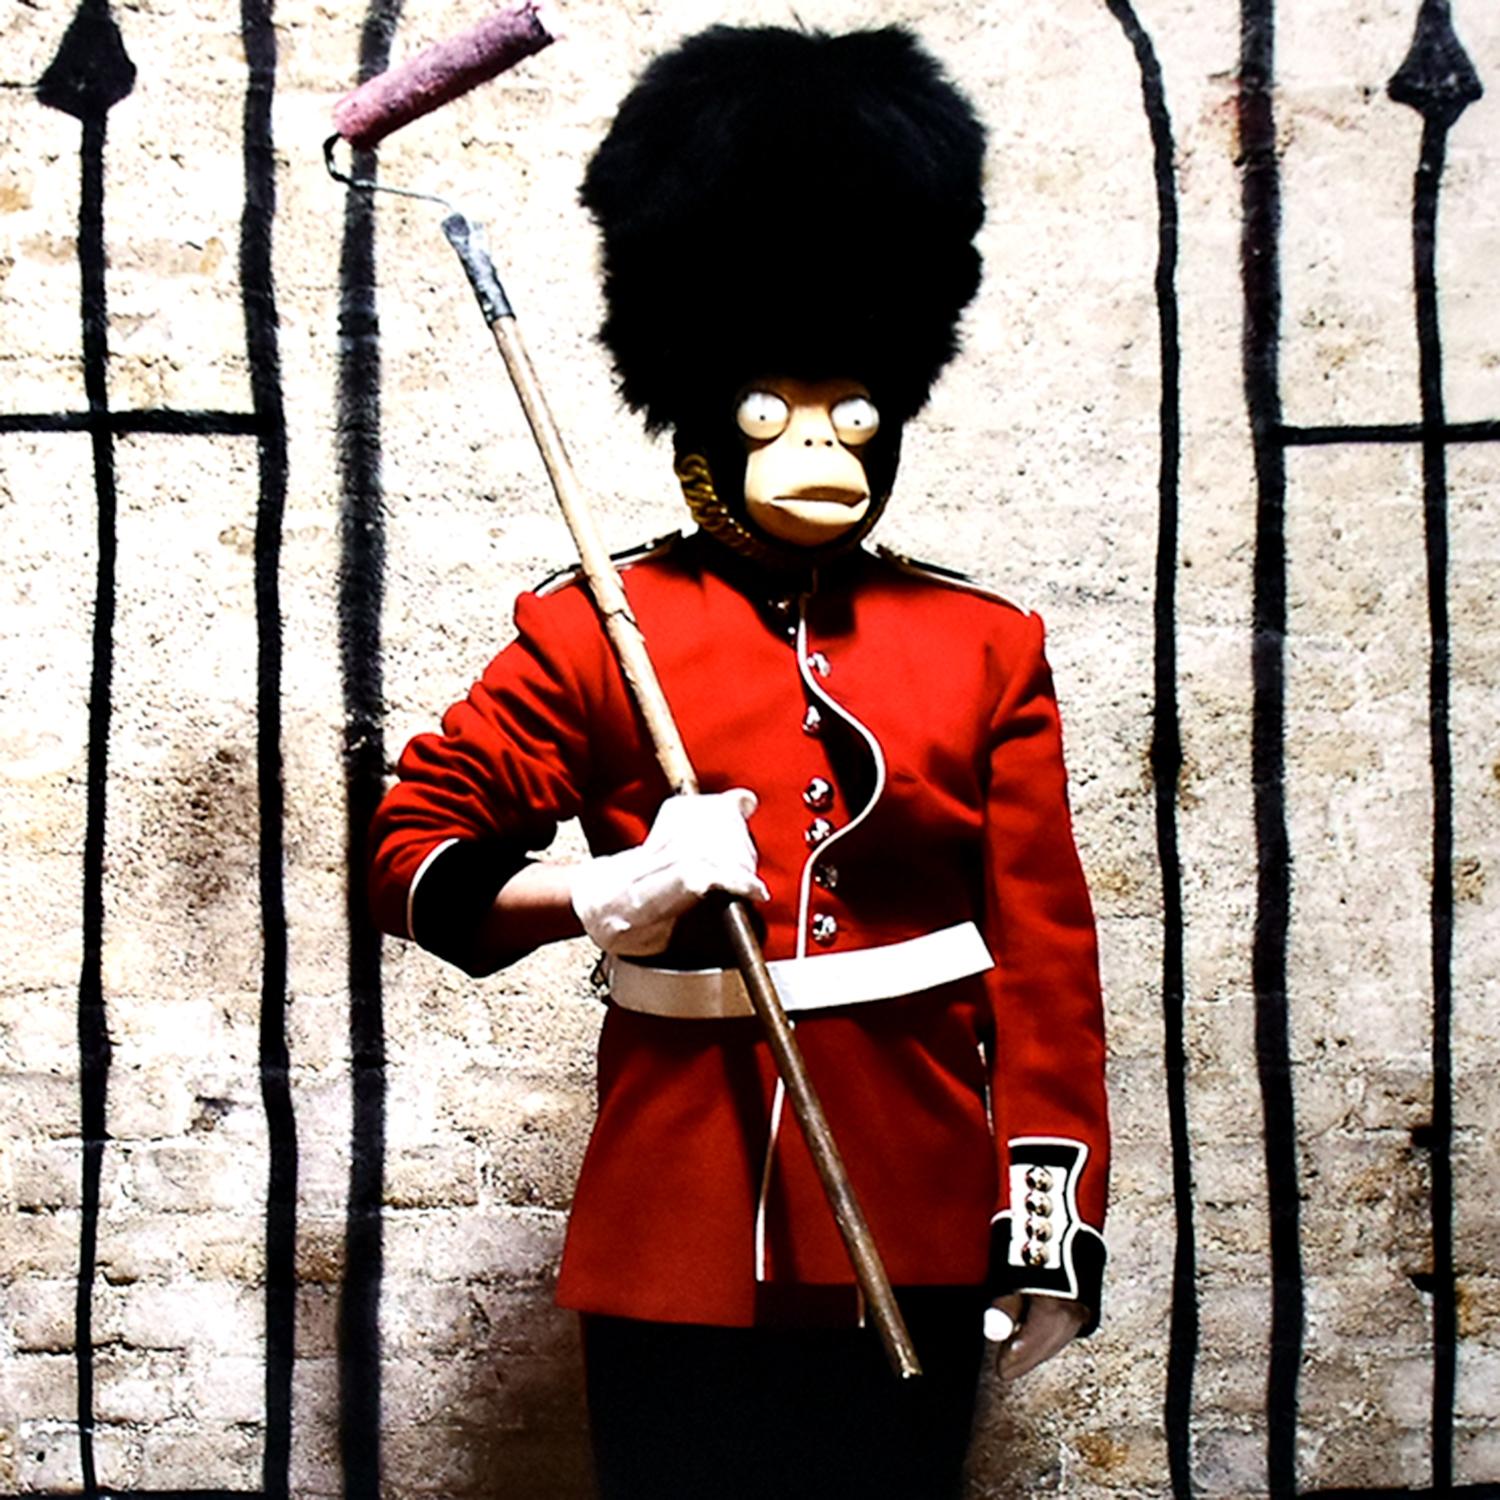 BANKSY Time Out London Poster - Street Art Print by Banksy